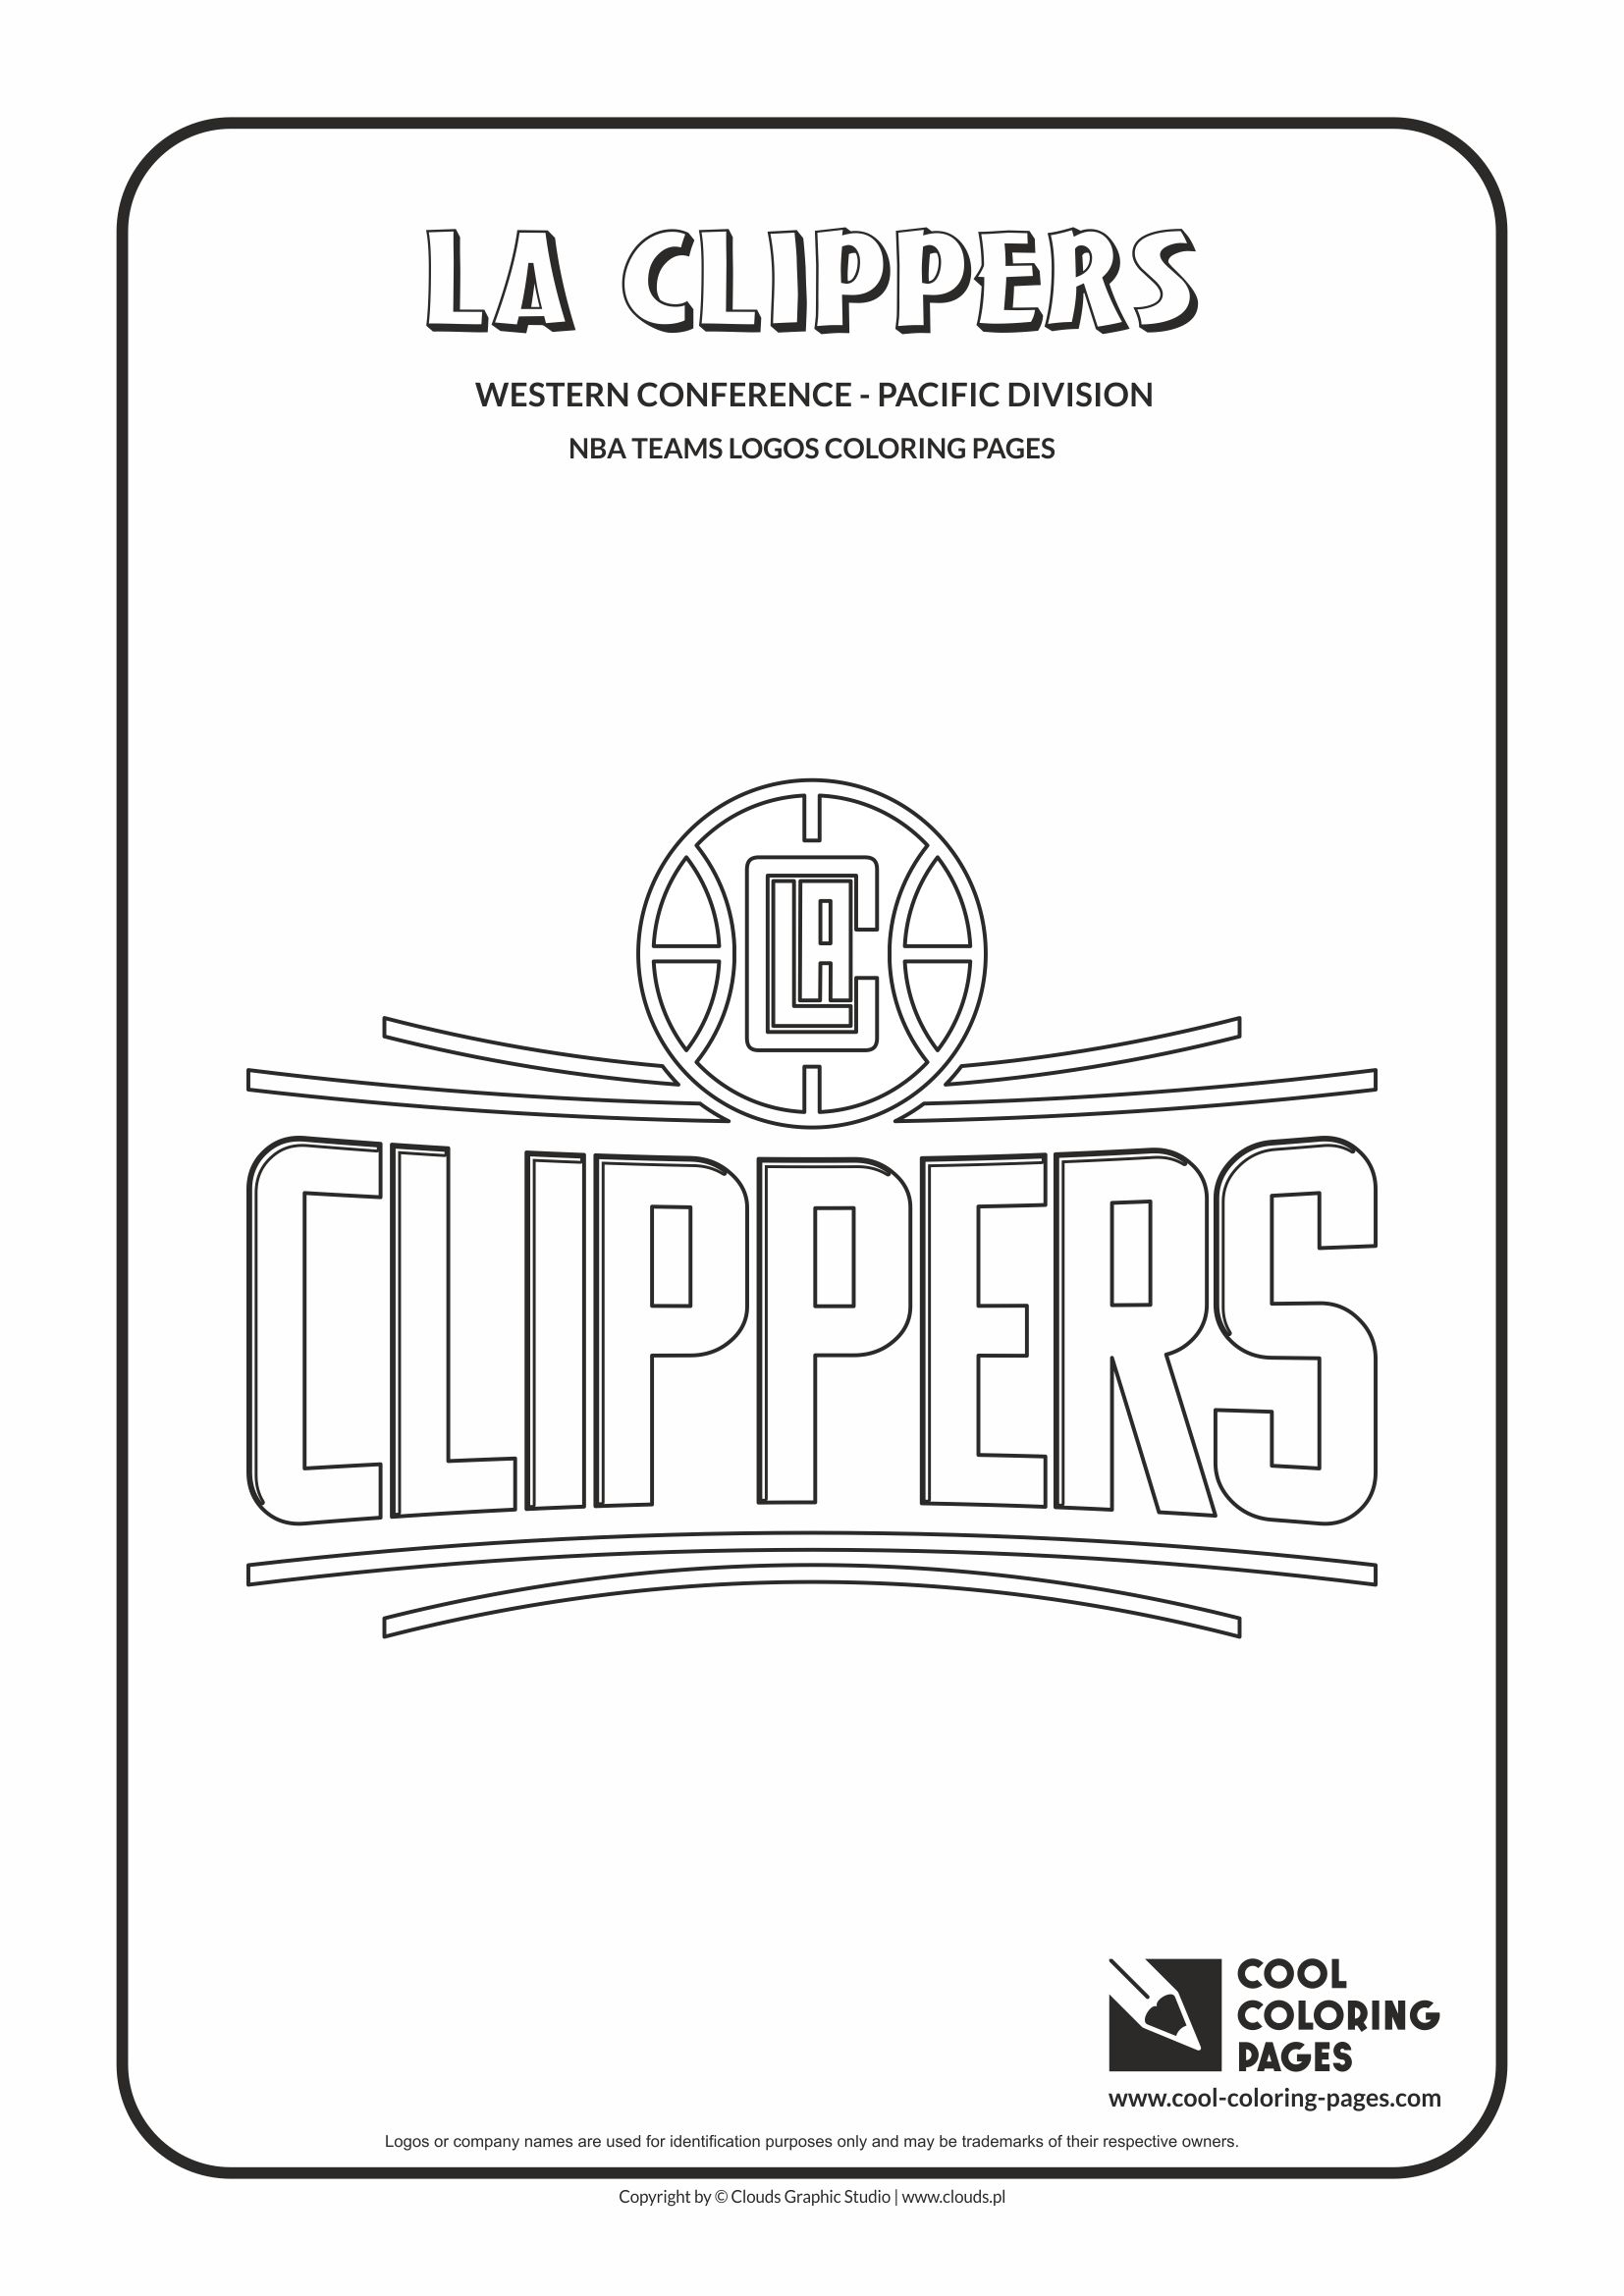 Cool Coloring Pages NBA teams logos coloring pages - Cool Coloring Pages | Free ...